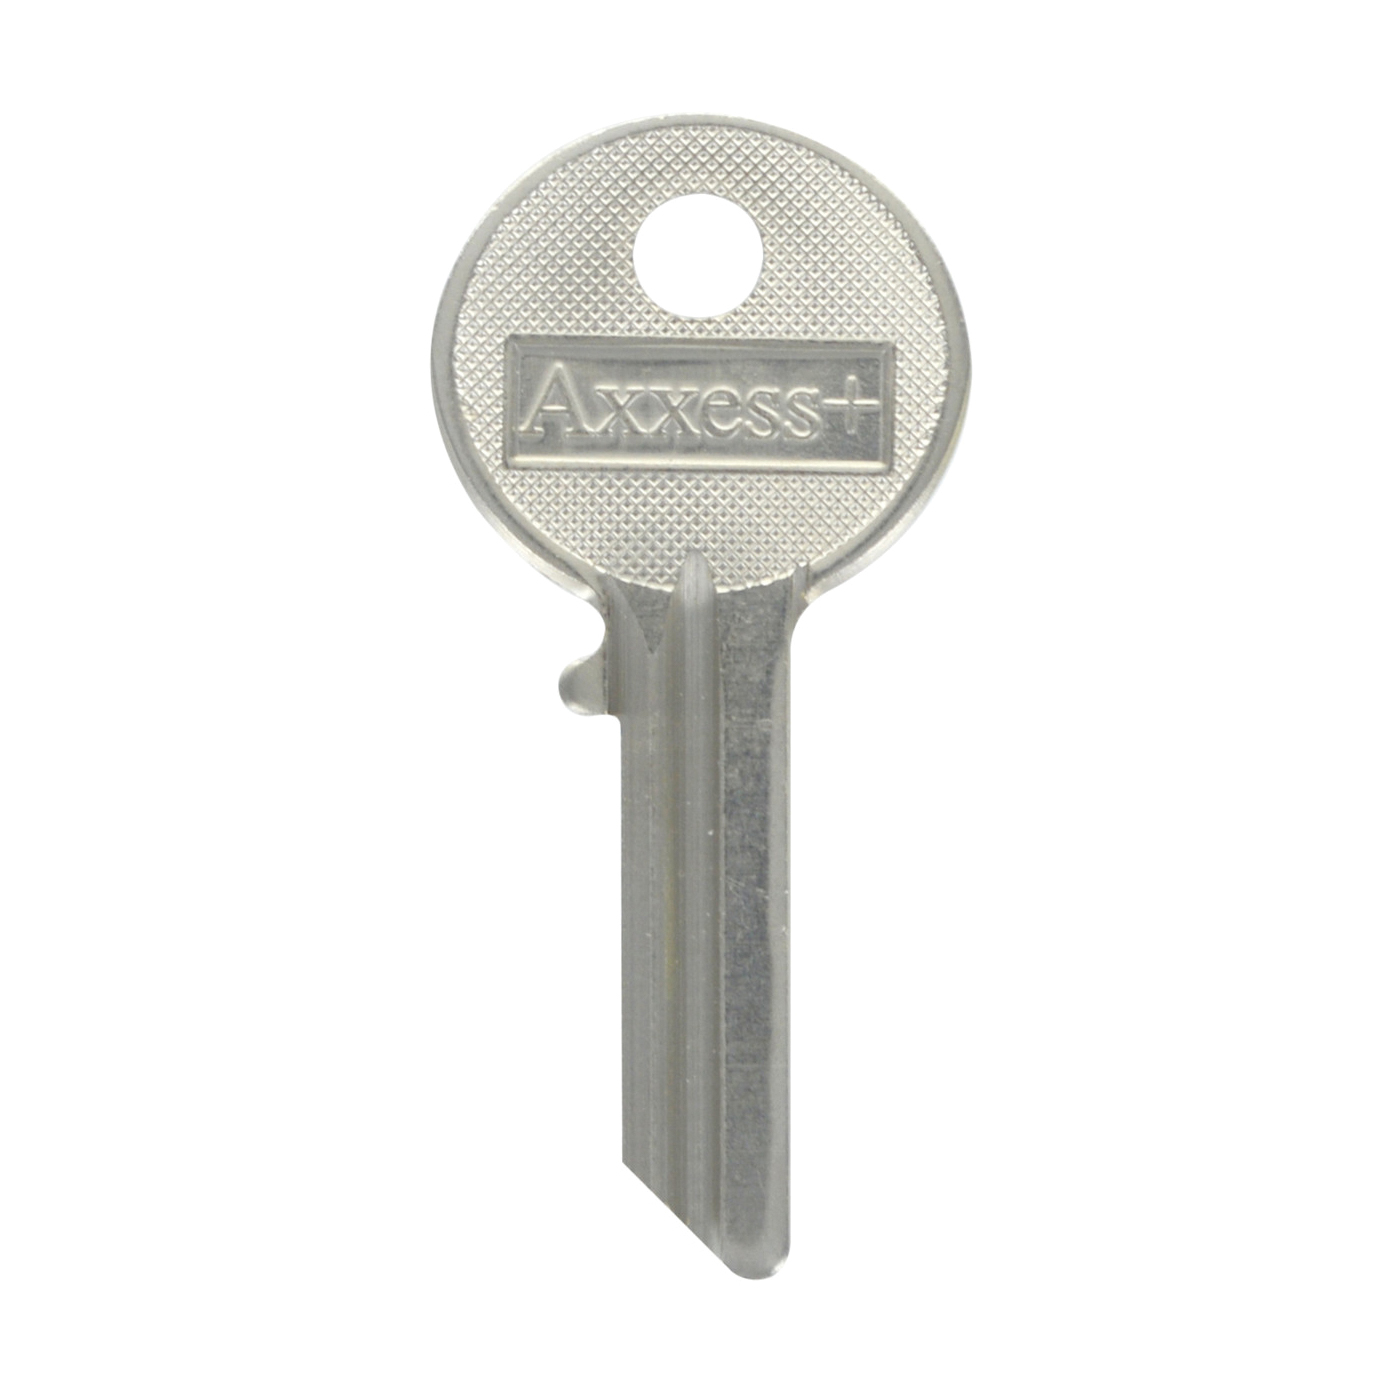 87555 Key Blank, Brass, Nickel-Plated, For: Yale Locks